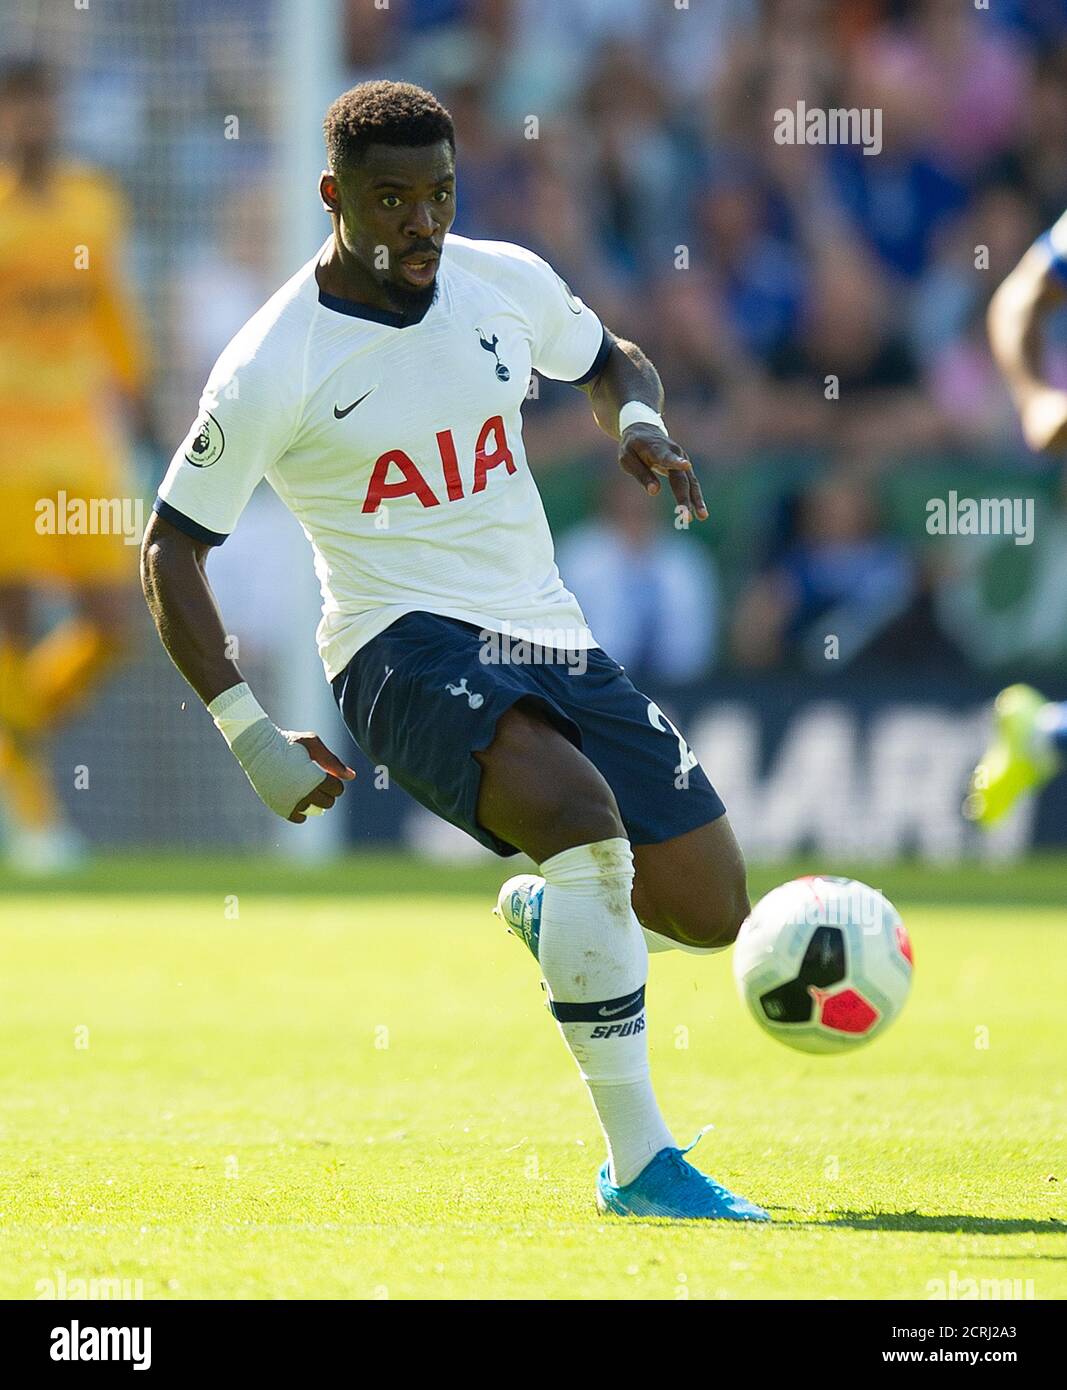 Tottenham Hotspurs' Serge Aurier   PHOTO CREDIT : © MARK PAIN / ALAMY STOCK PHOTO Stock Photo